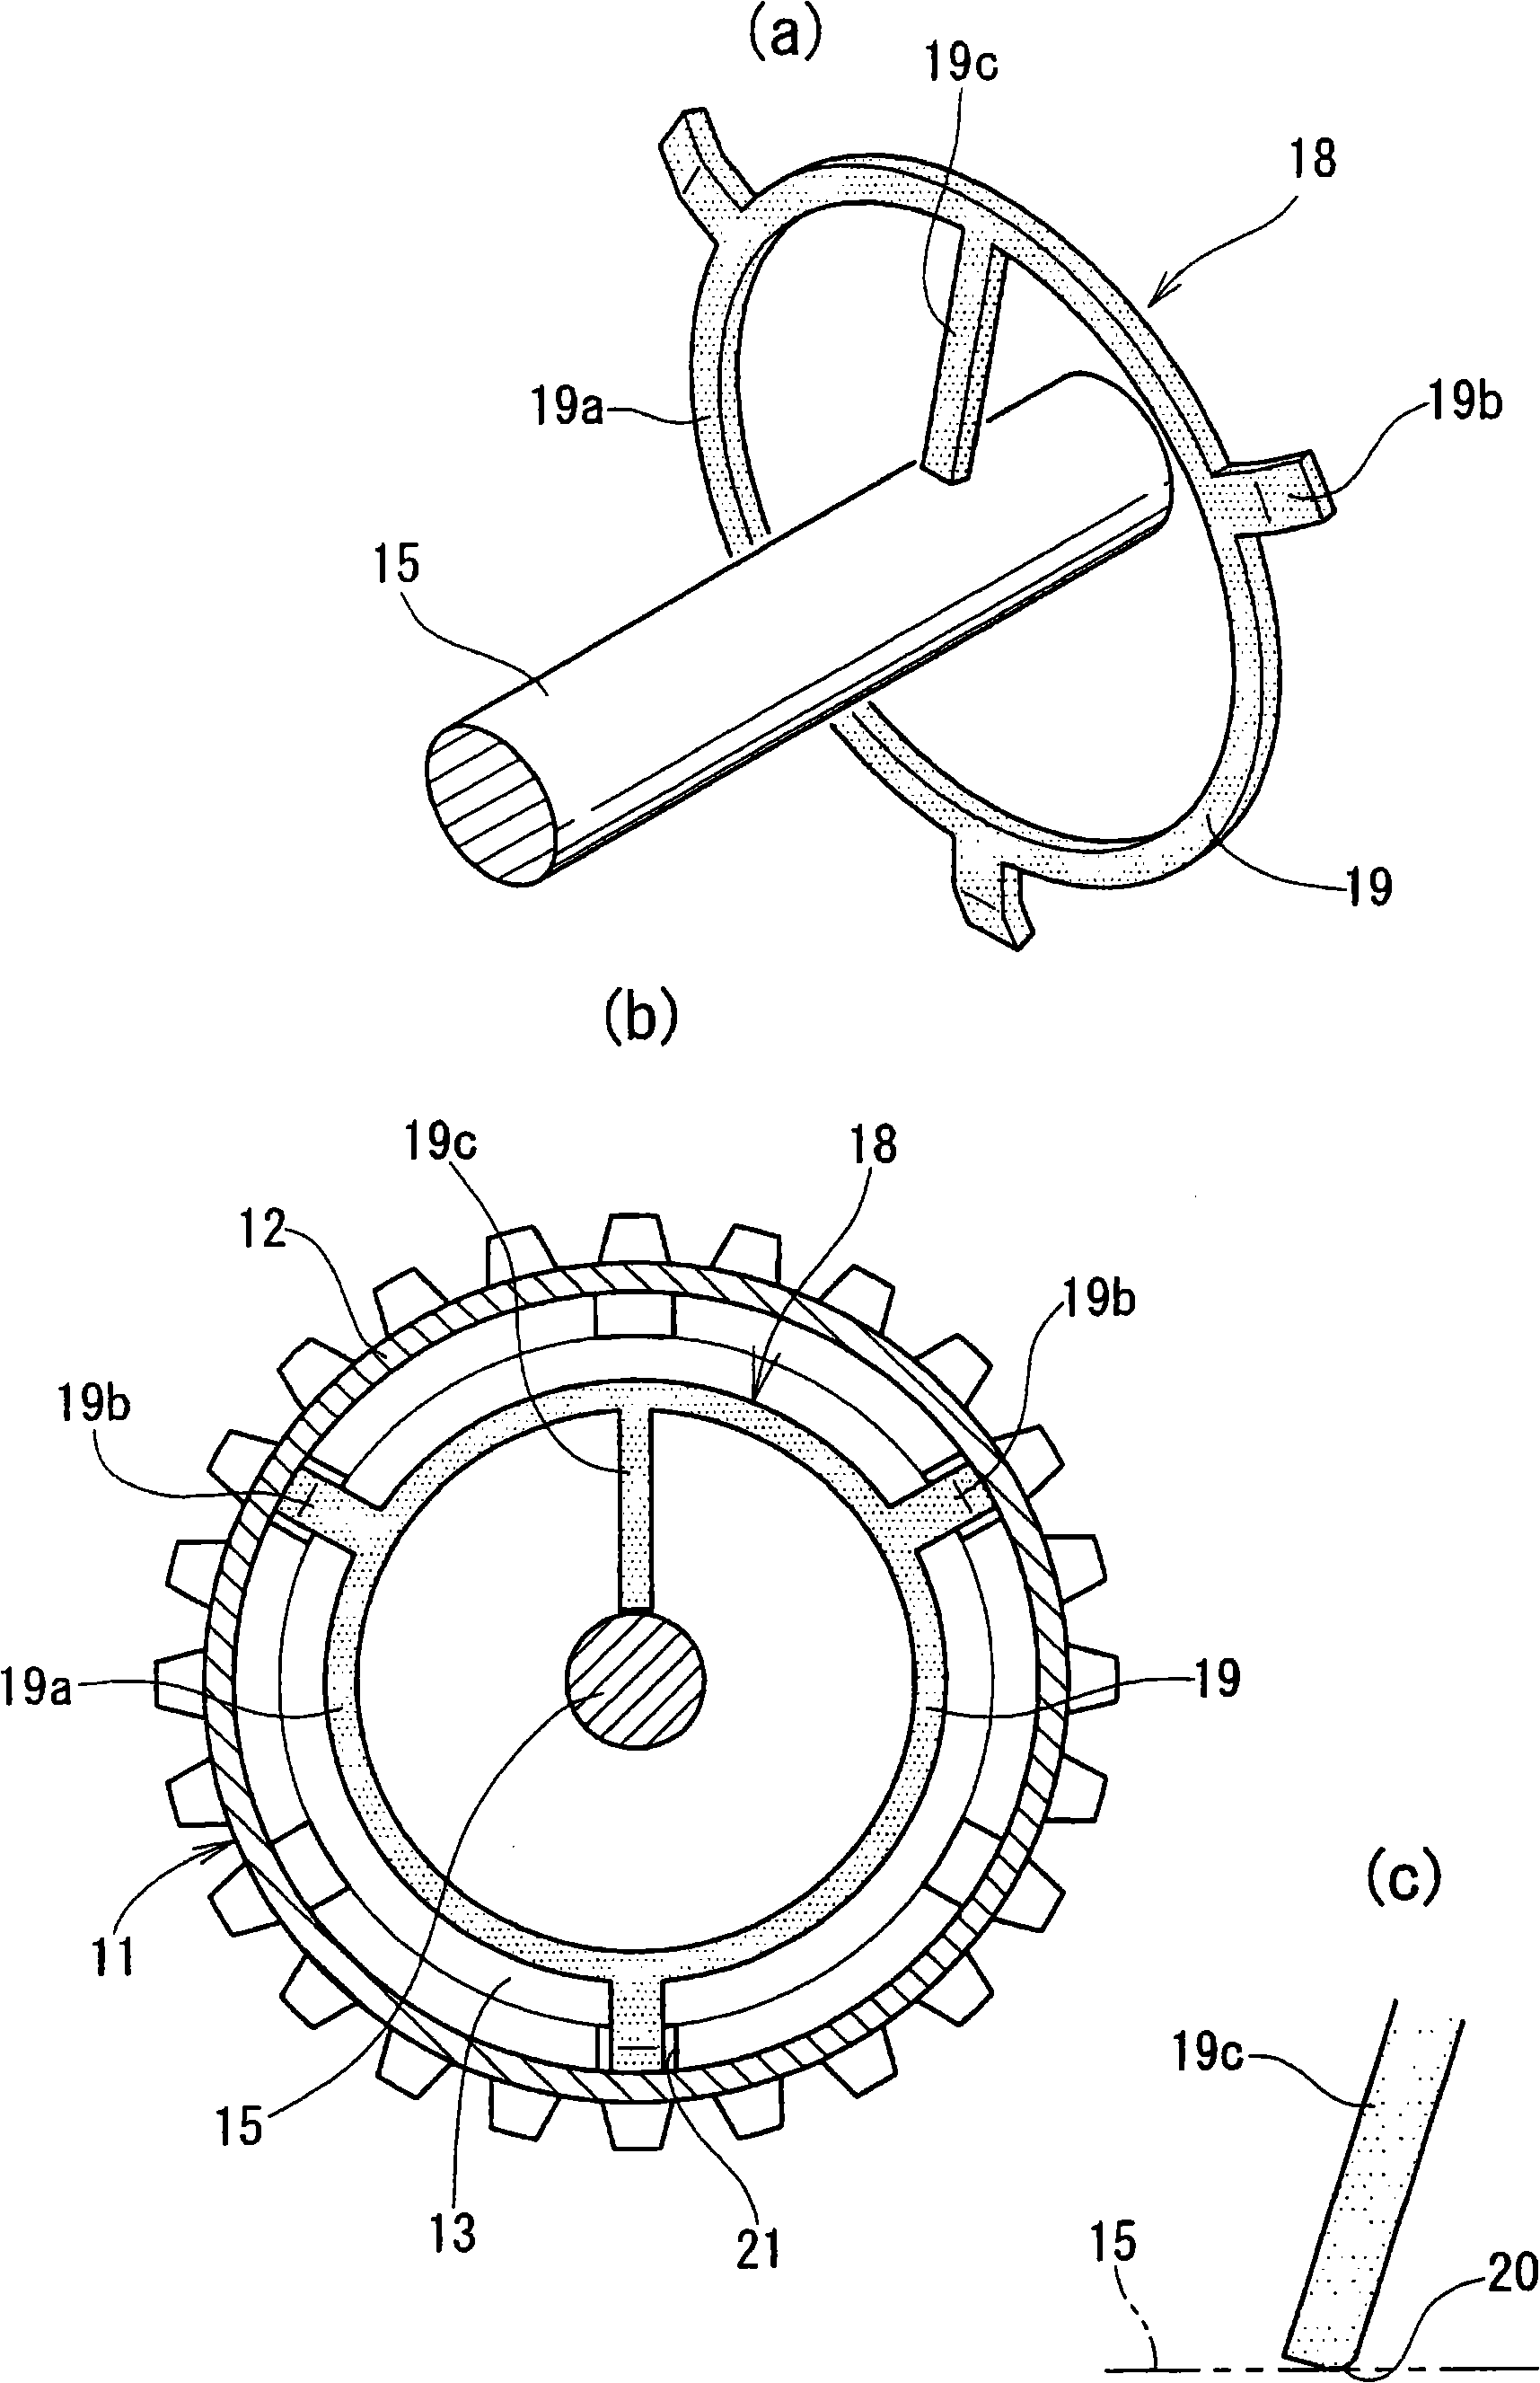 Grounding device of sensitometric drum and sensitometric drum unit of image forming device